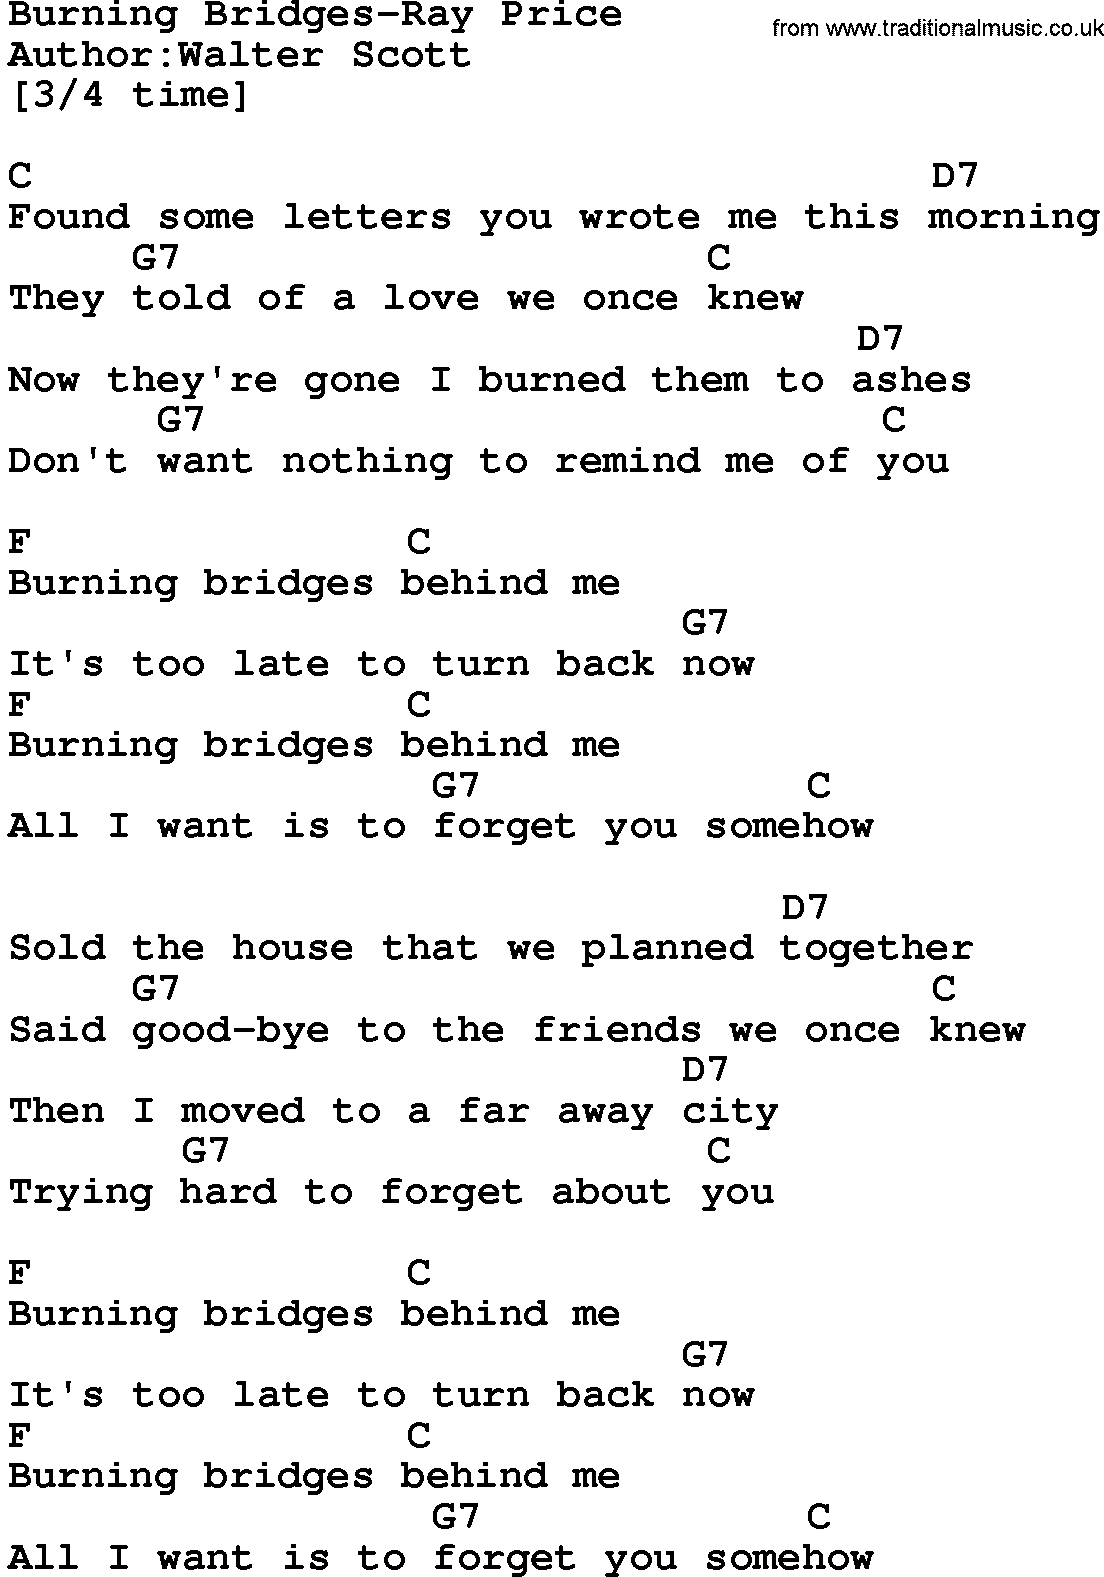 Country music song: Burning Bridges-Ray Price lyrics and chords